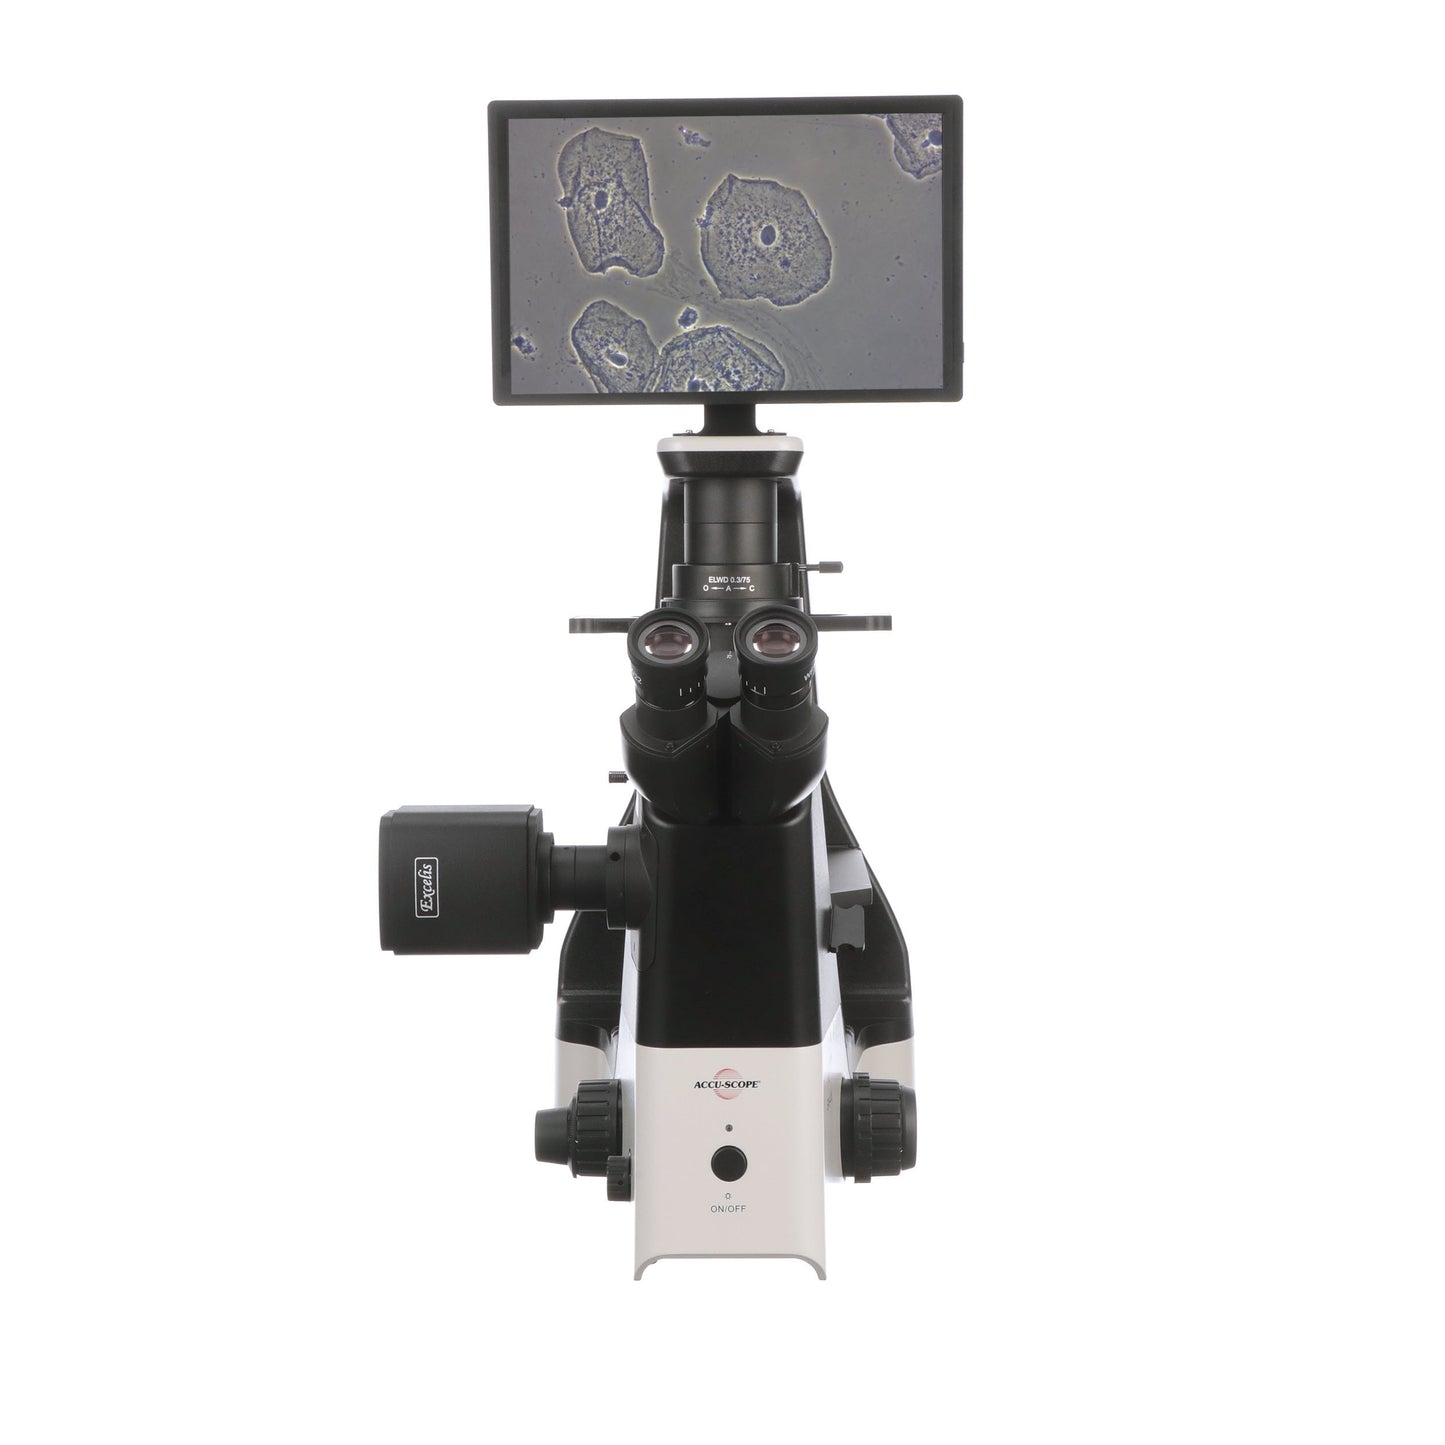 Accu-Scope EXI-410 Inverted Phase Contrast Digital HD Microscope